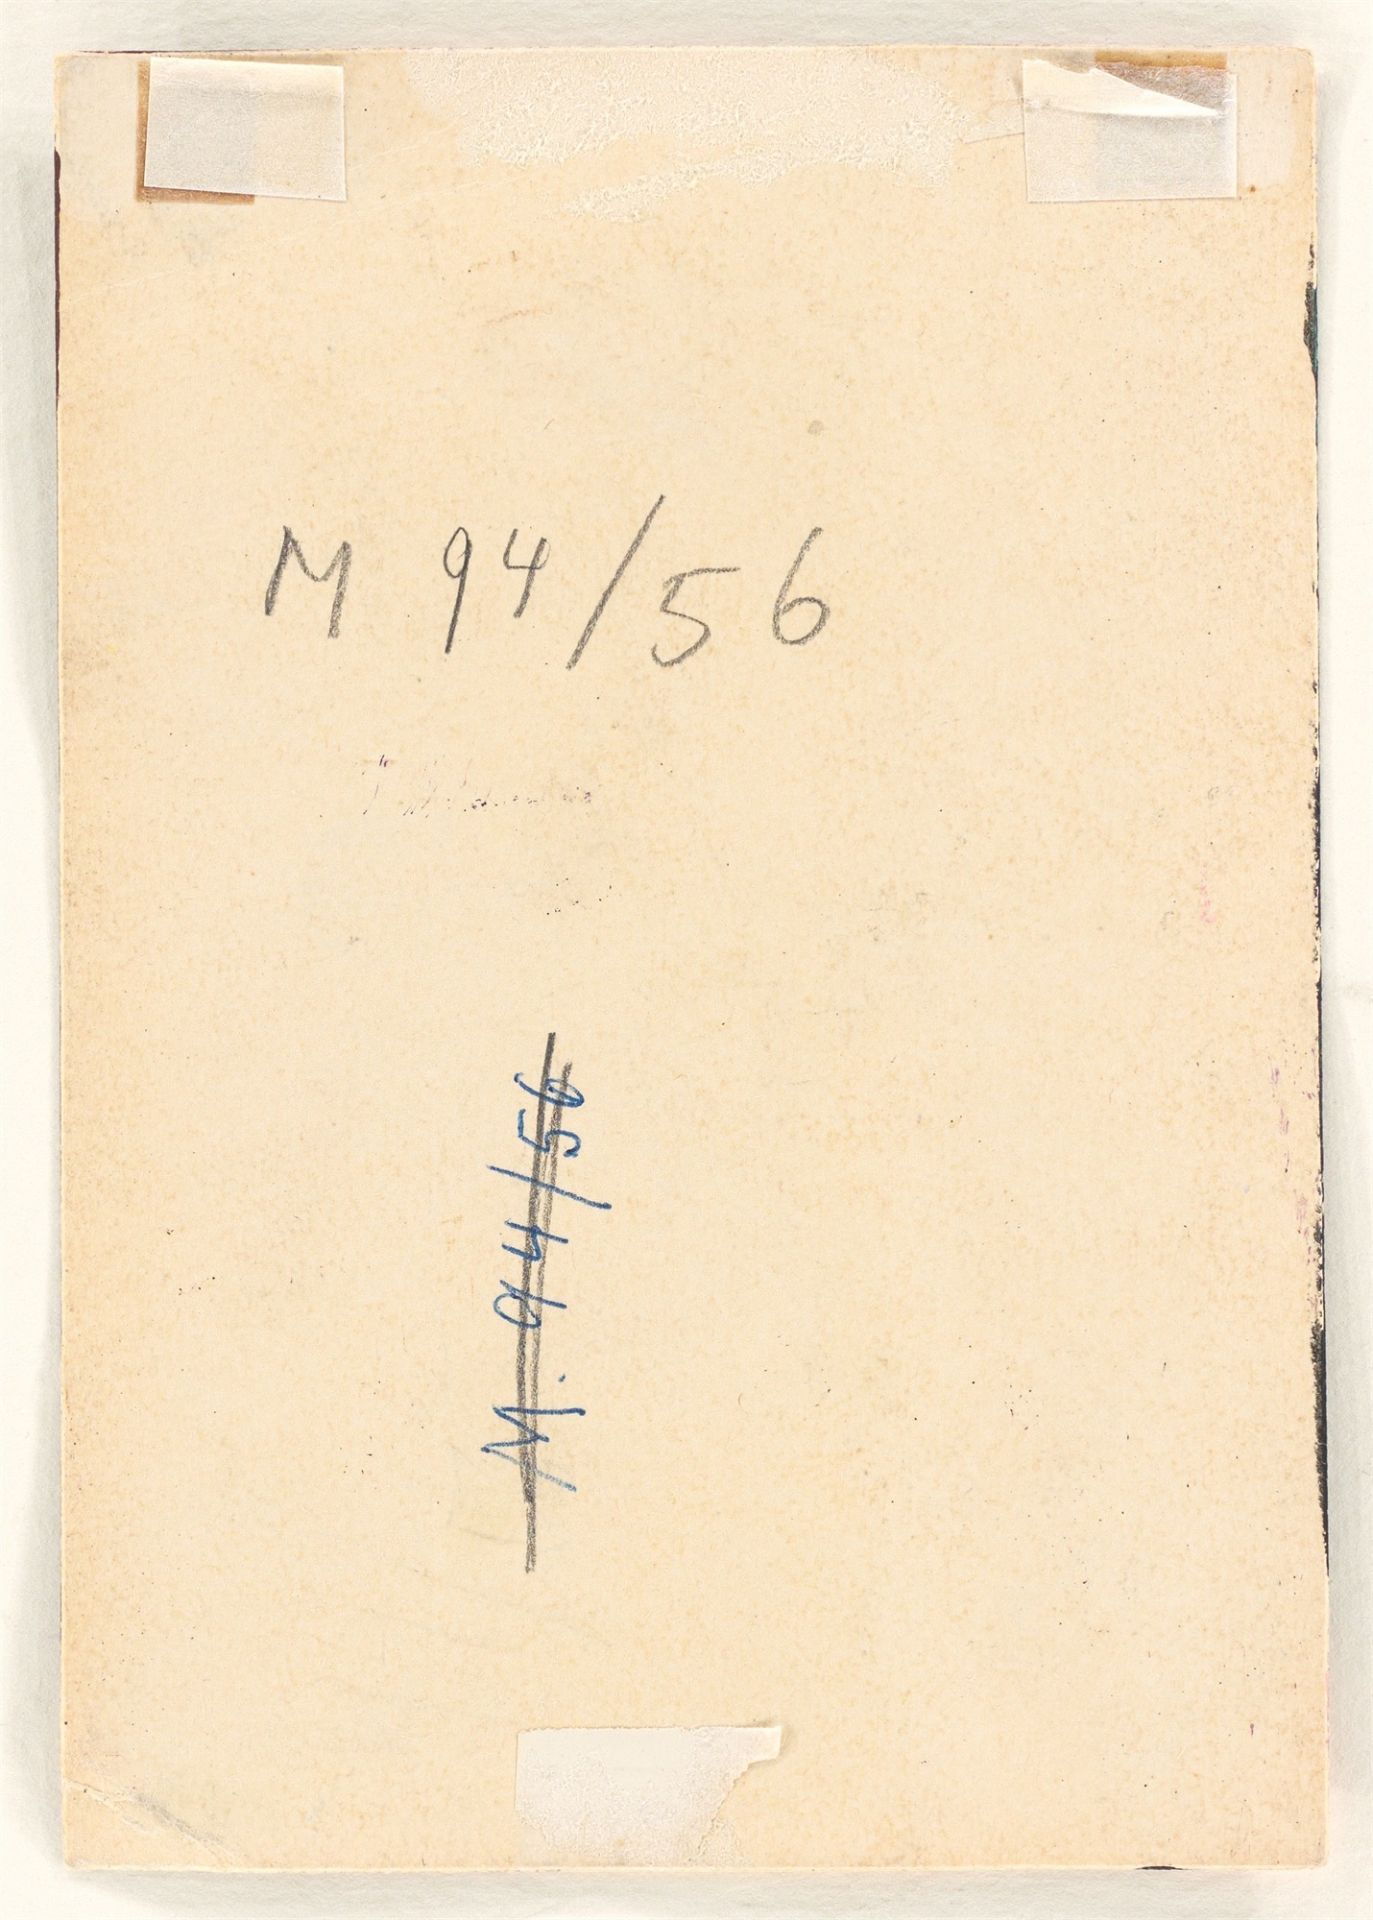 Theodor Werner. ”Miniatur Nr. 94/56”. 1956 - Image 3 of 3